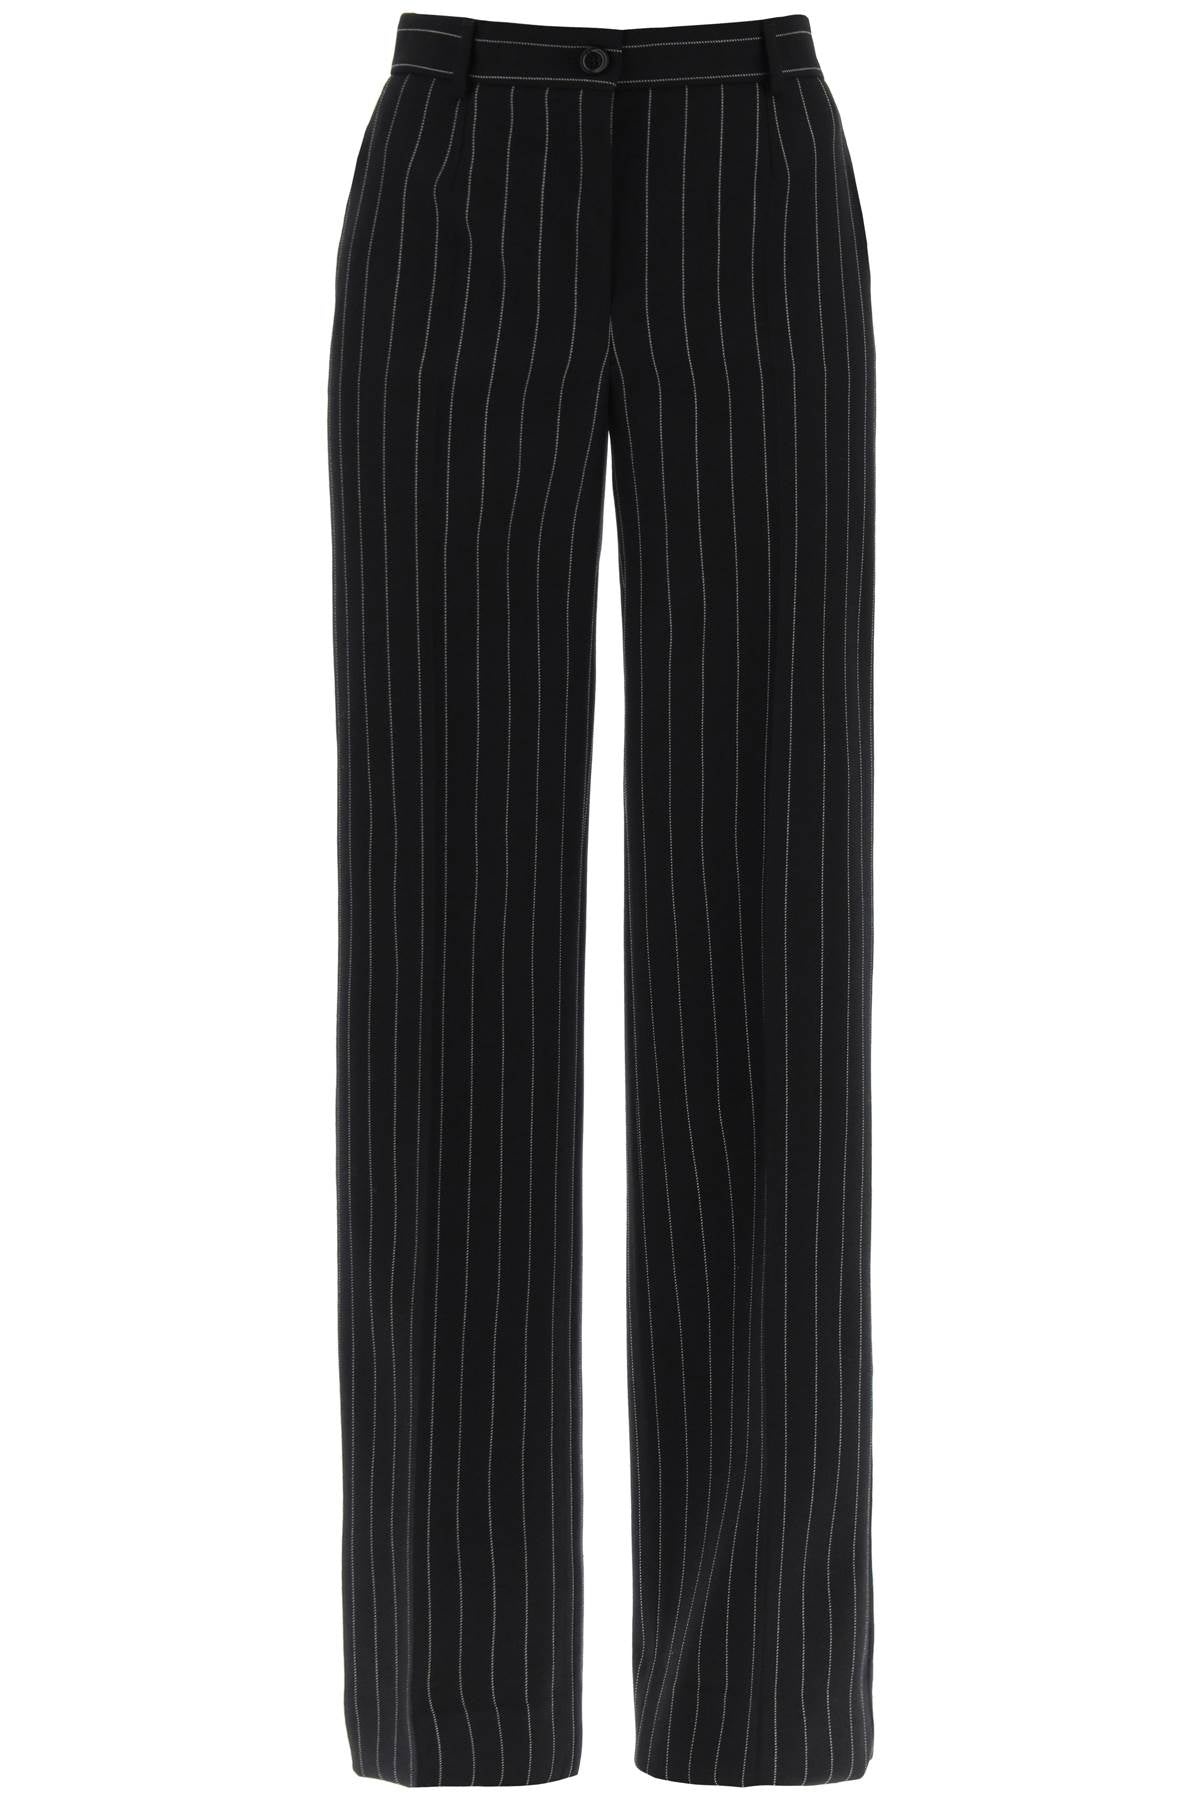 Dolce & Gabbana Striped Flare Leg Pants Women - 1